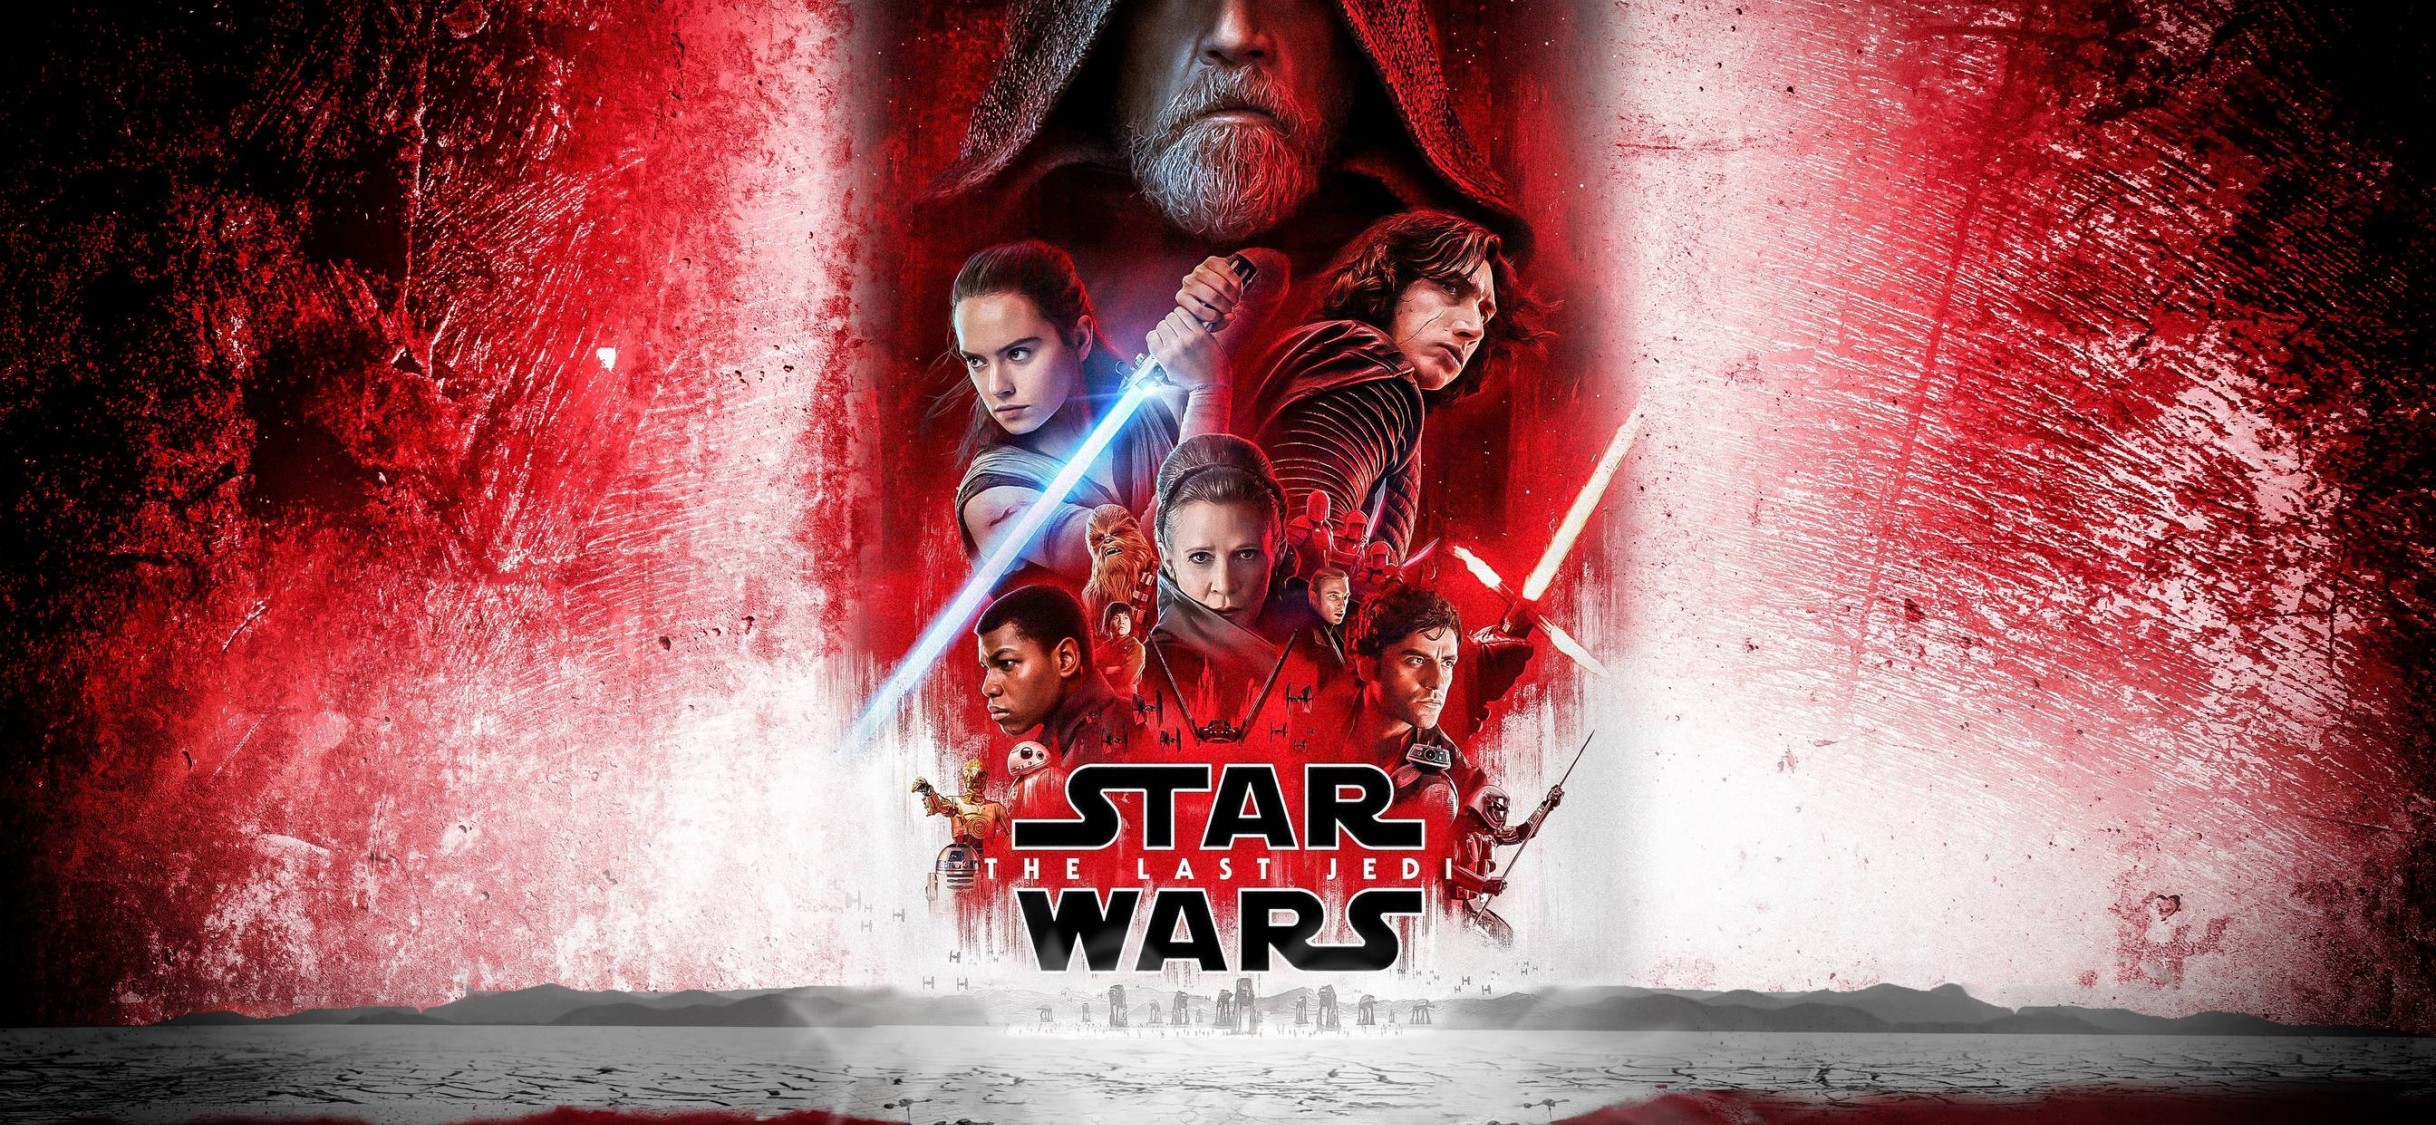 Star Wars Episode Viii The Last Jedi 2017 - HD Wallpaper 